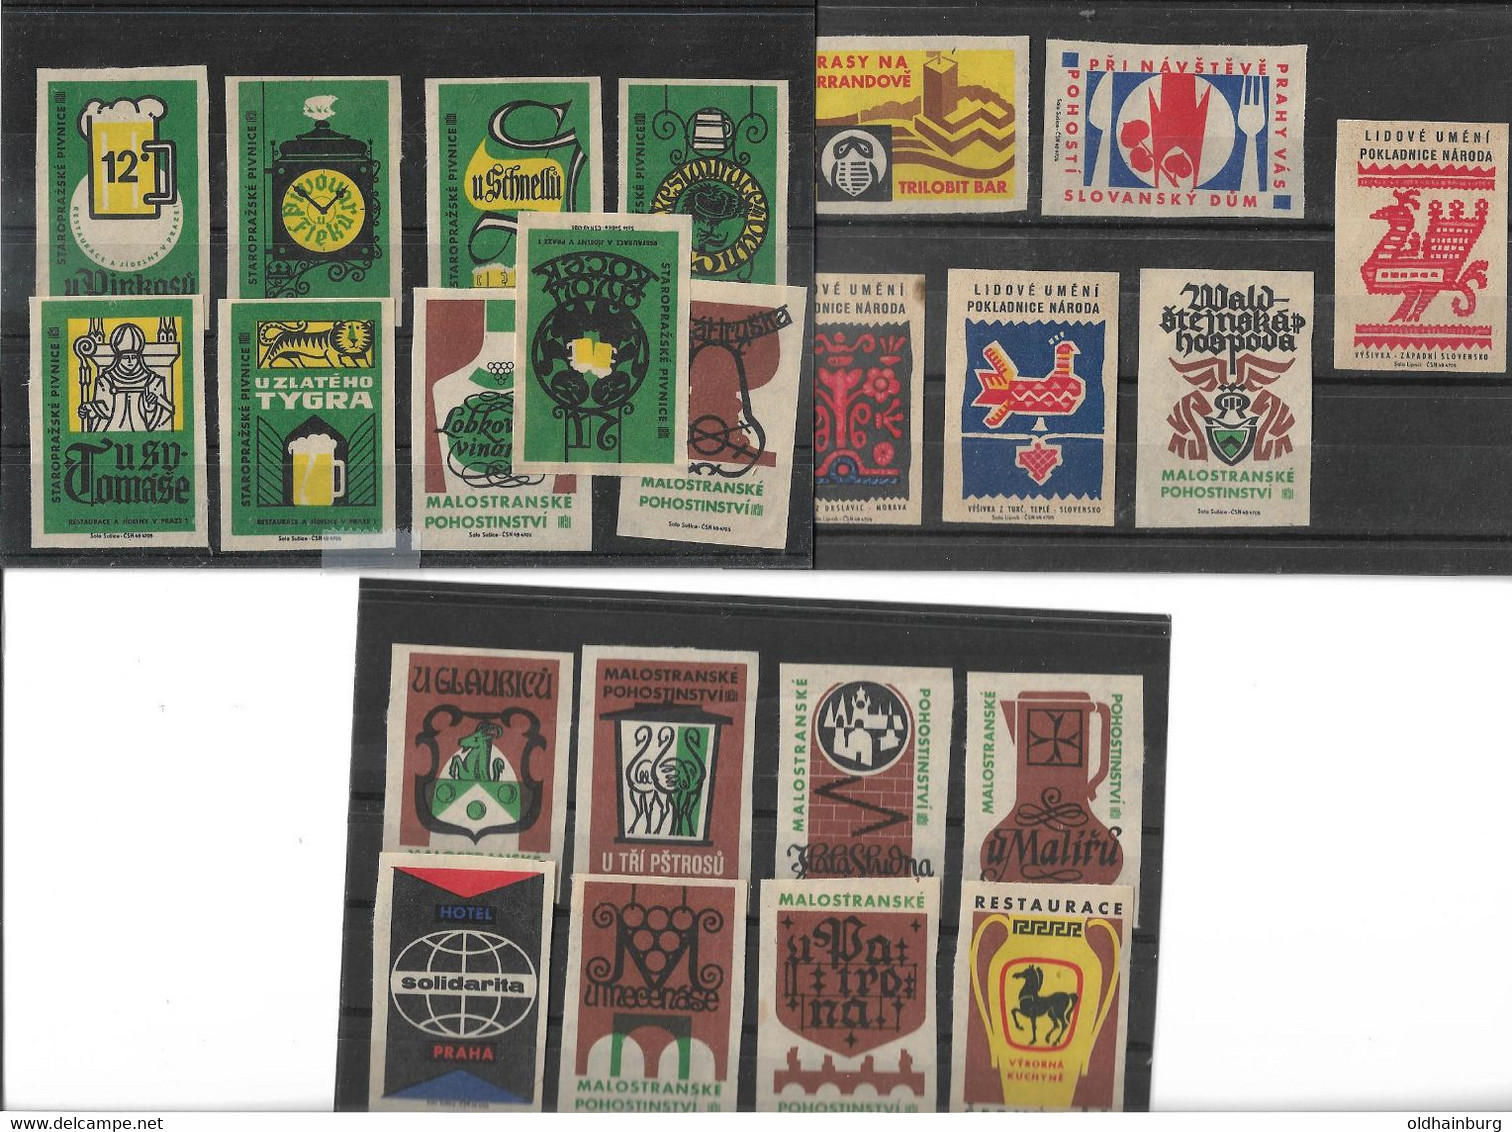 4188r: CSSR Um 1965, Vignettenserie "3 Steckkarten Lt. Scan" - Collections, Lots & Series